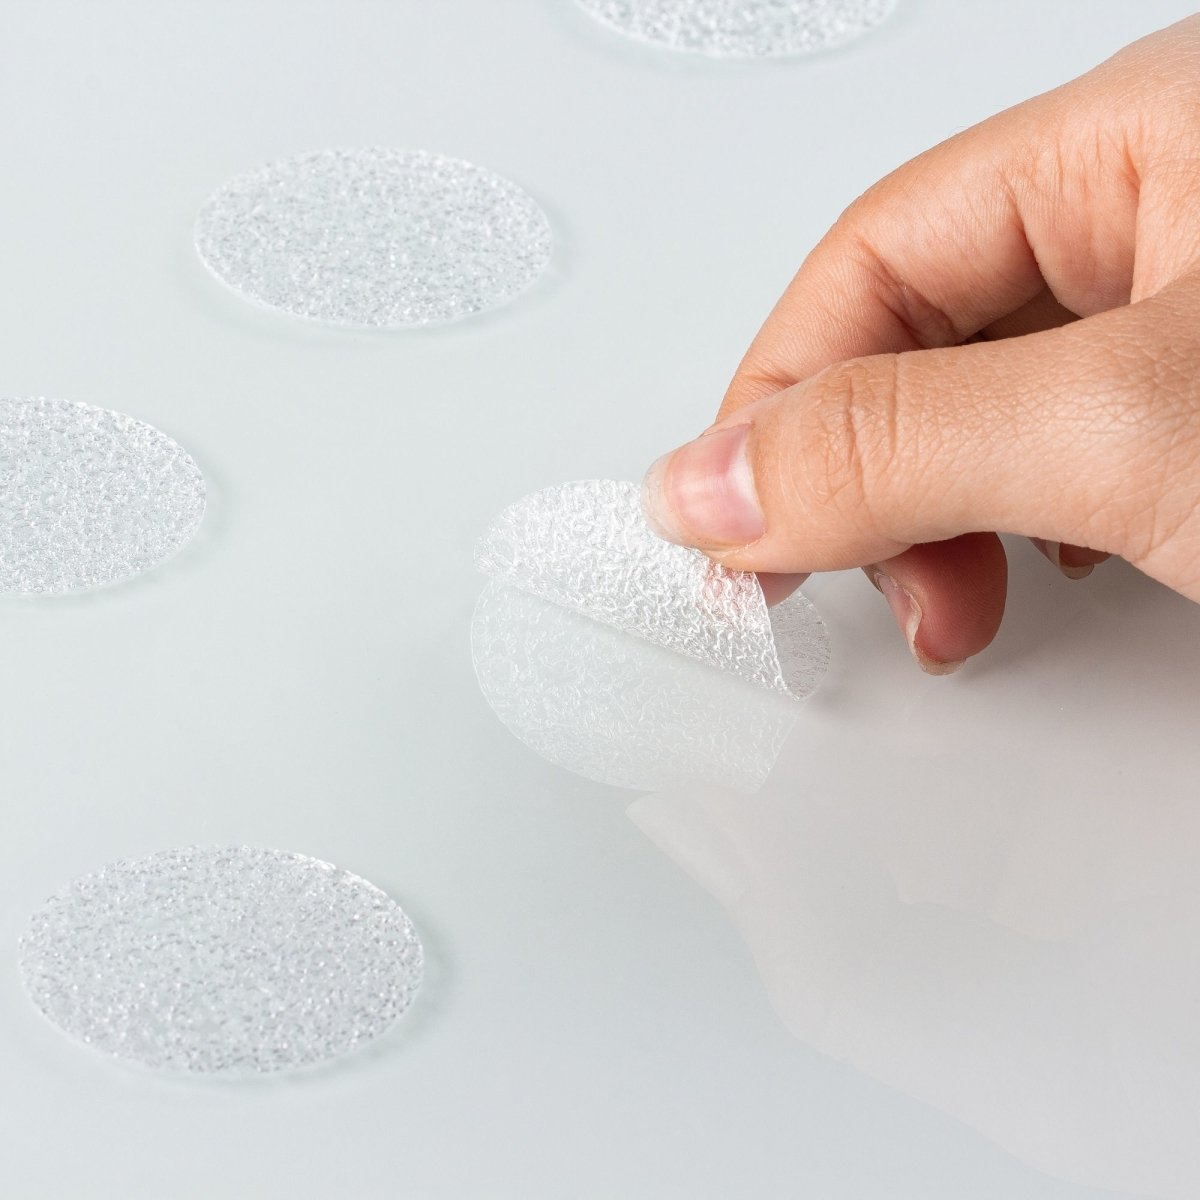 What are the main benefits of using anti slip bath discs? - Slips Away